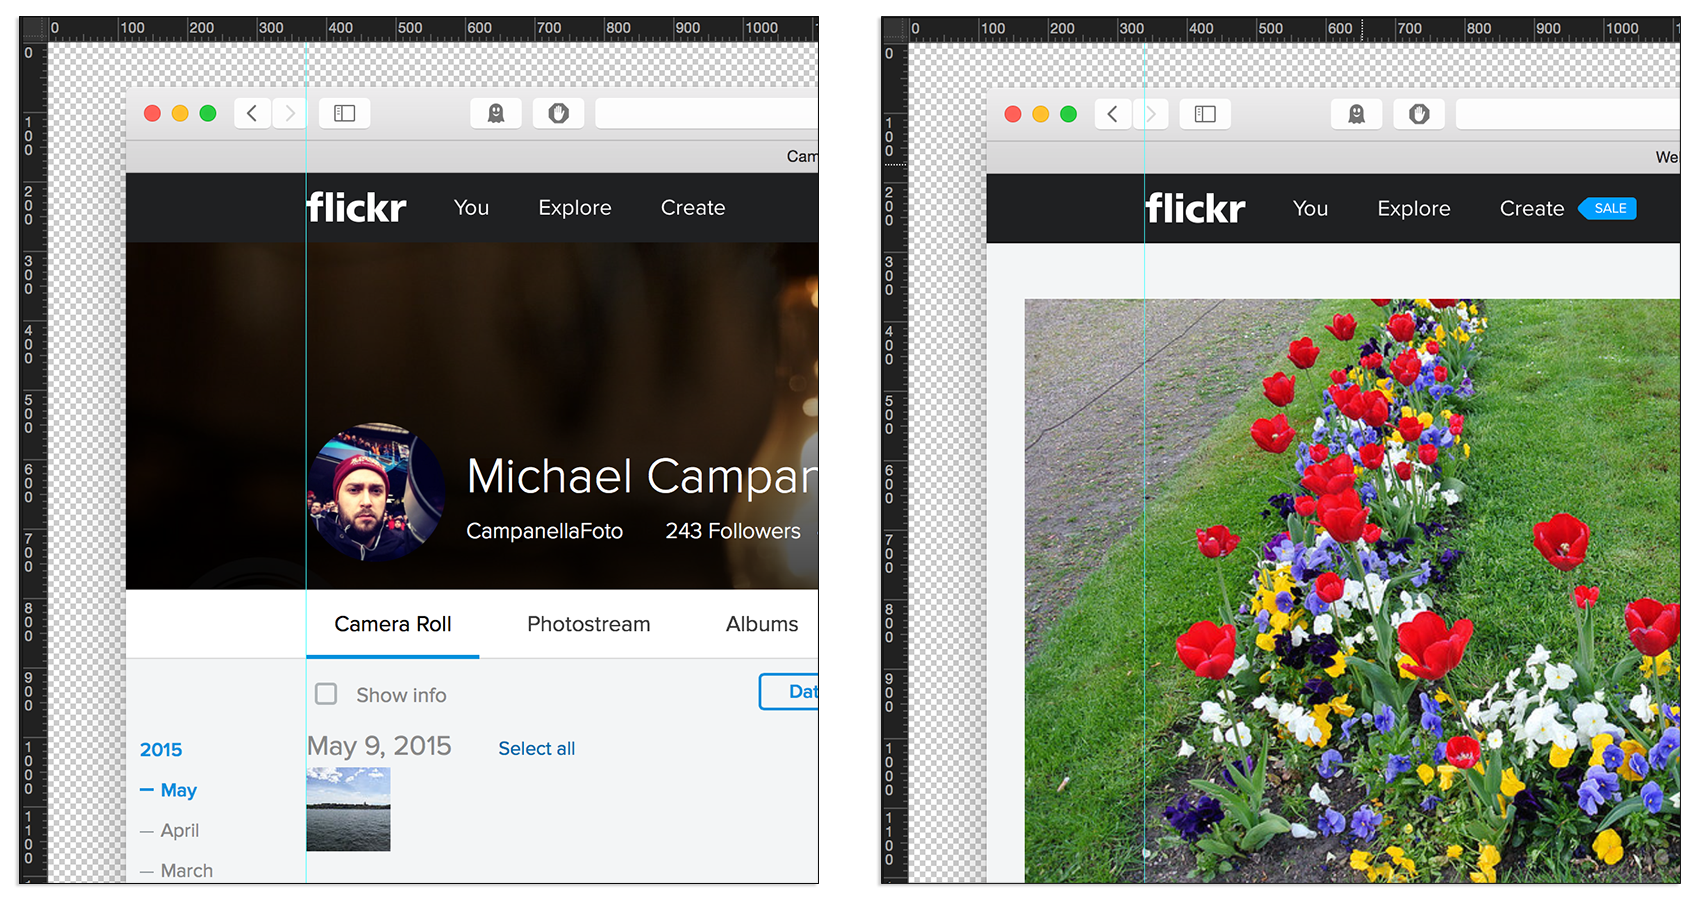 Flickr 4.0 - Menu Alignment